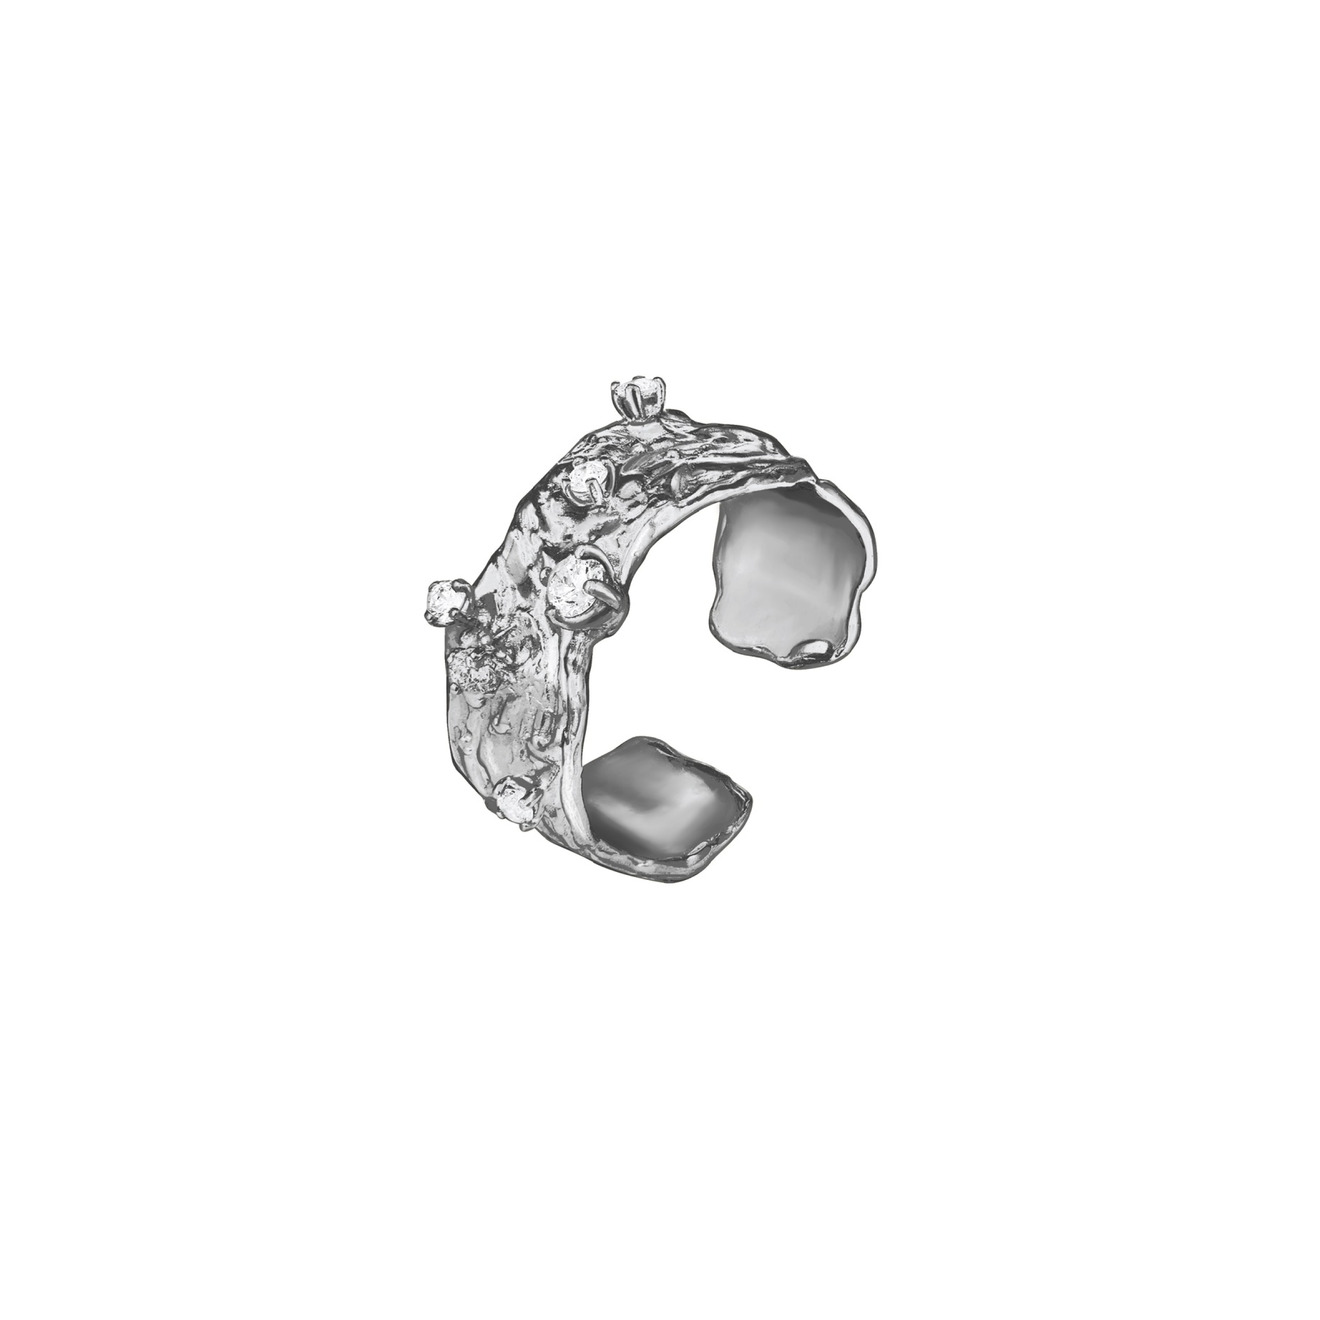 nastya maximova серьги кольца из серебра с фианитами Nastya Maximova Безразмерное кольцо из серебра с фианитами